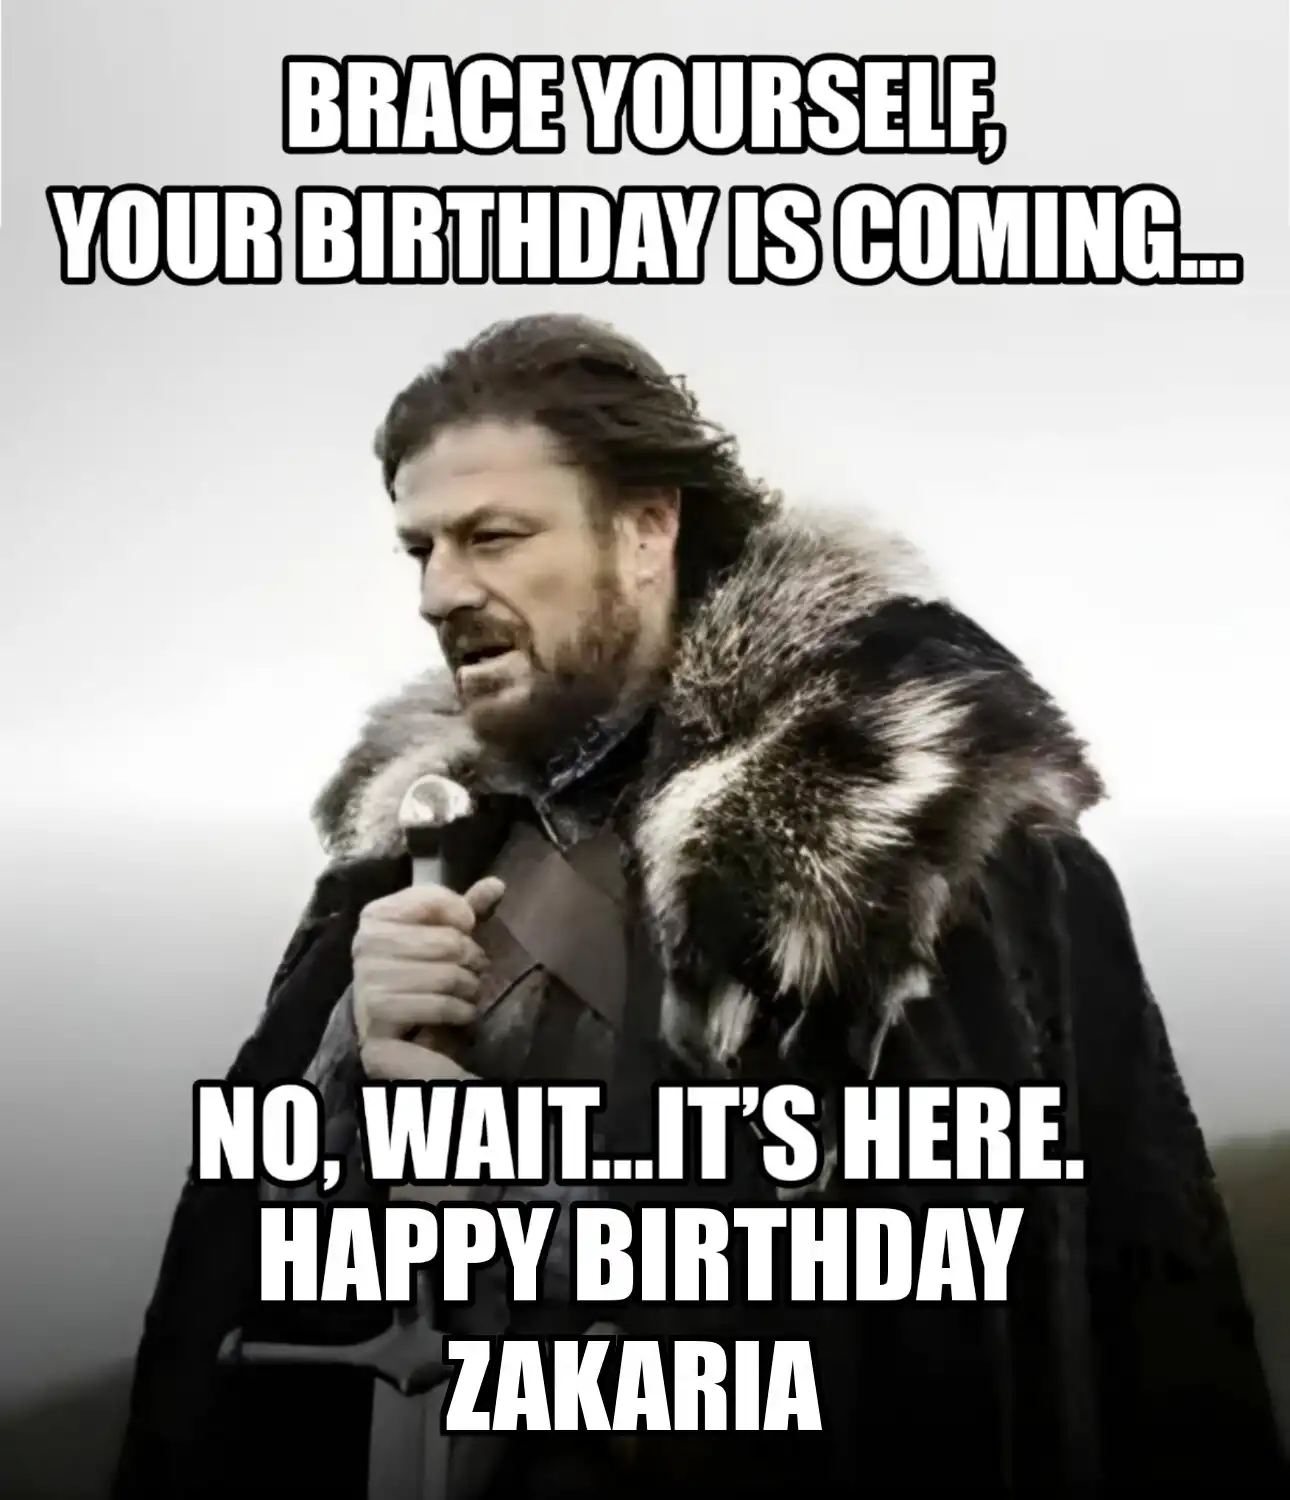 Happy Birthday Zakaria Brace Yourself Your Birthday Is Coming Meme